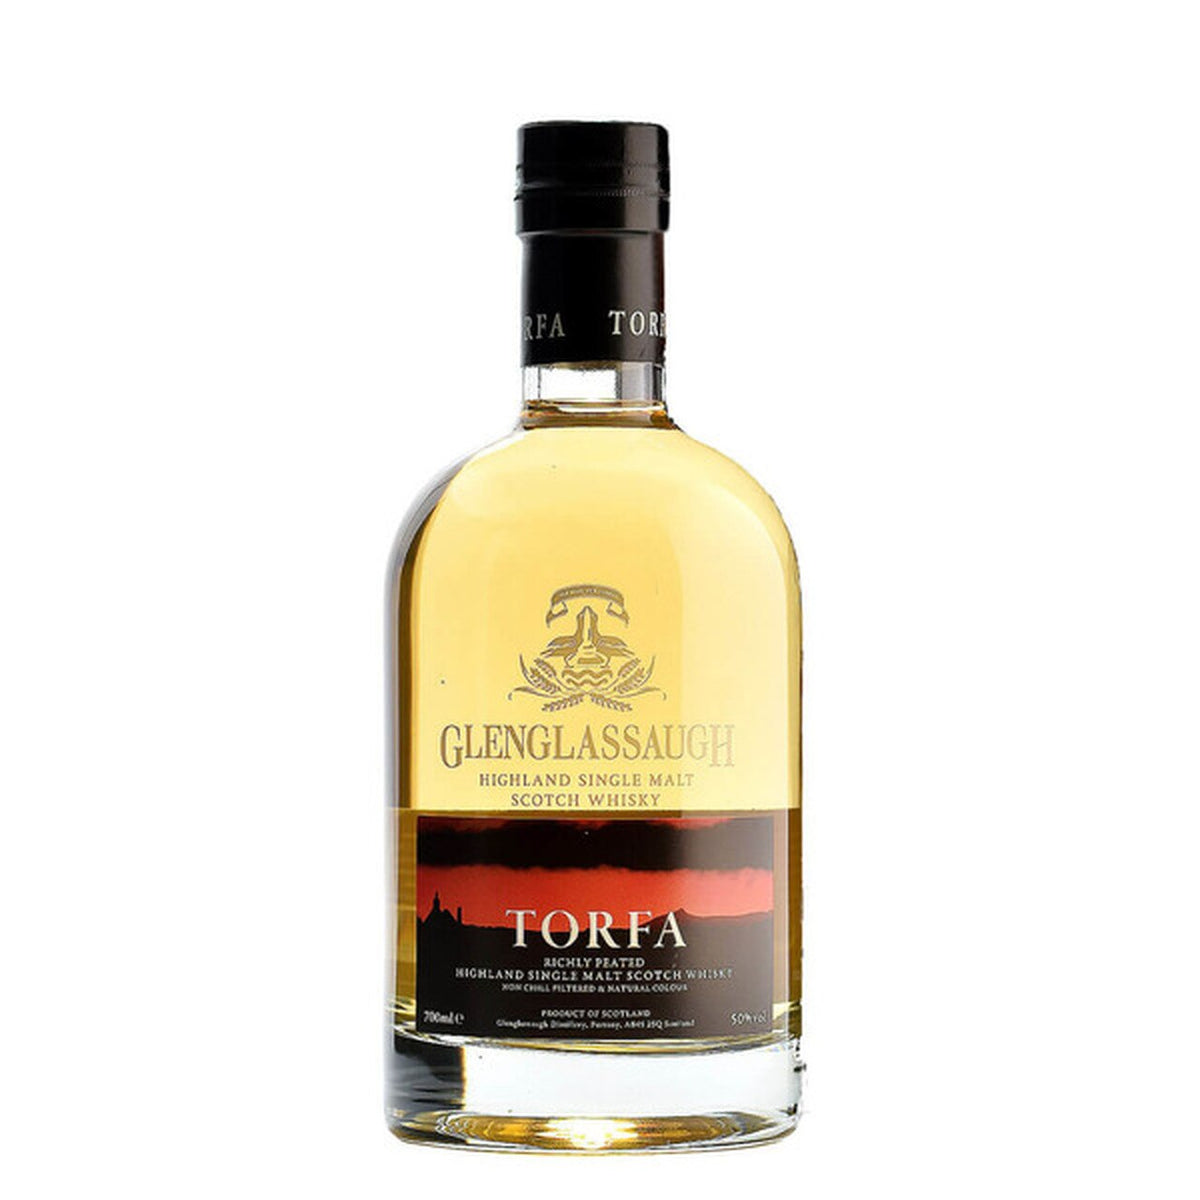 Glenlassaugh Glenglassaugh Torfa Single Malt Scotch Whisky Scotch